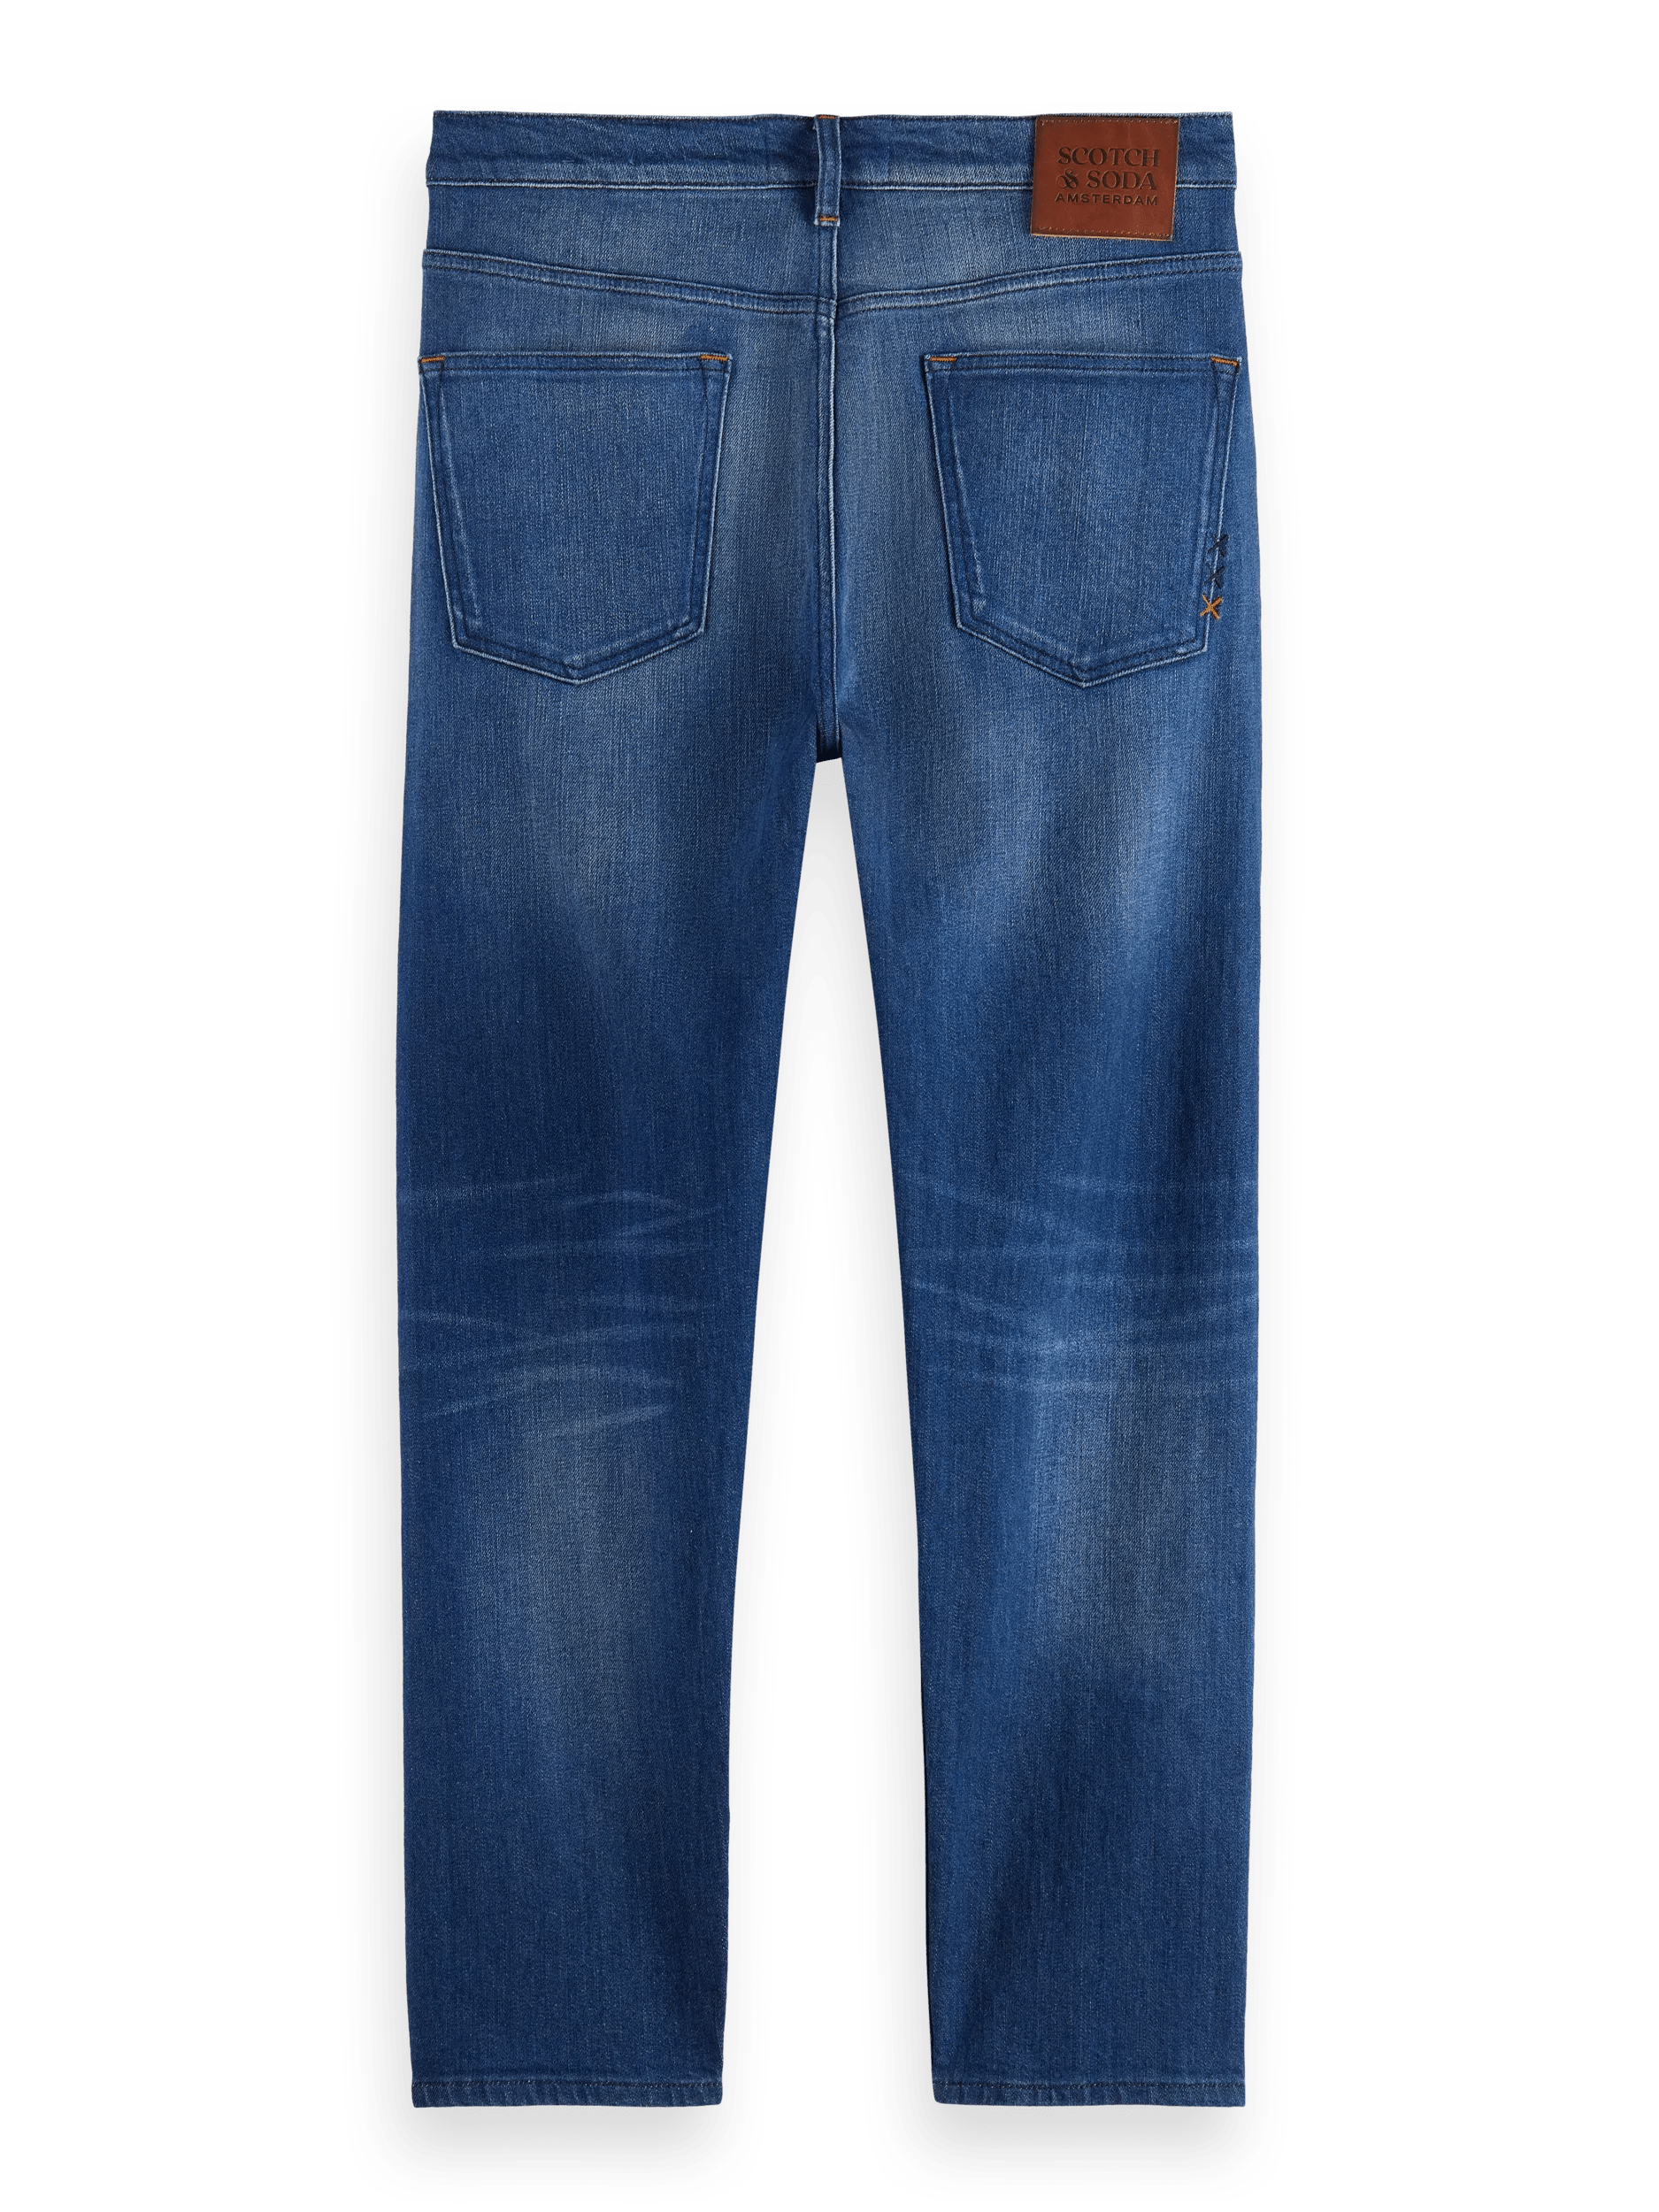 Scotch & Soda De Drop regular tapered-fit jeans Scenic Blauw BCK